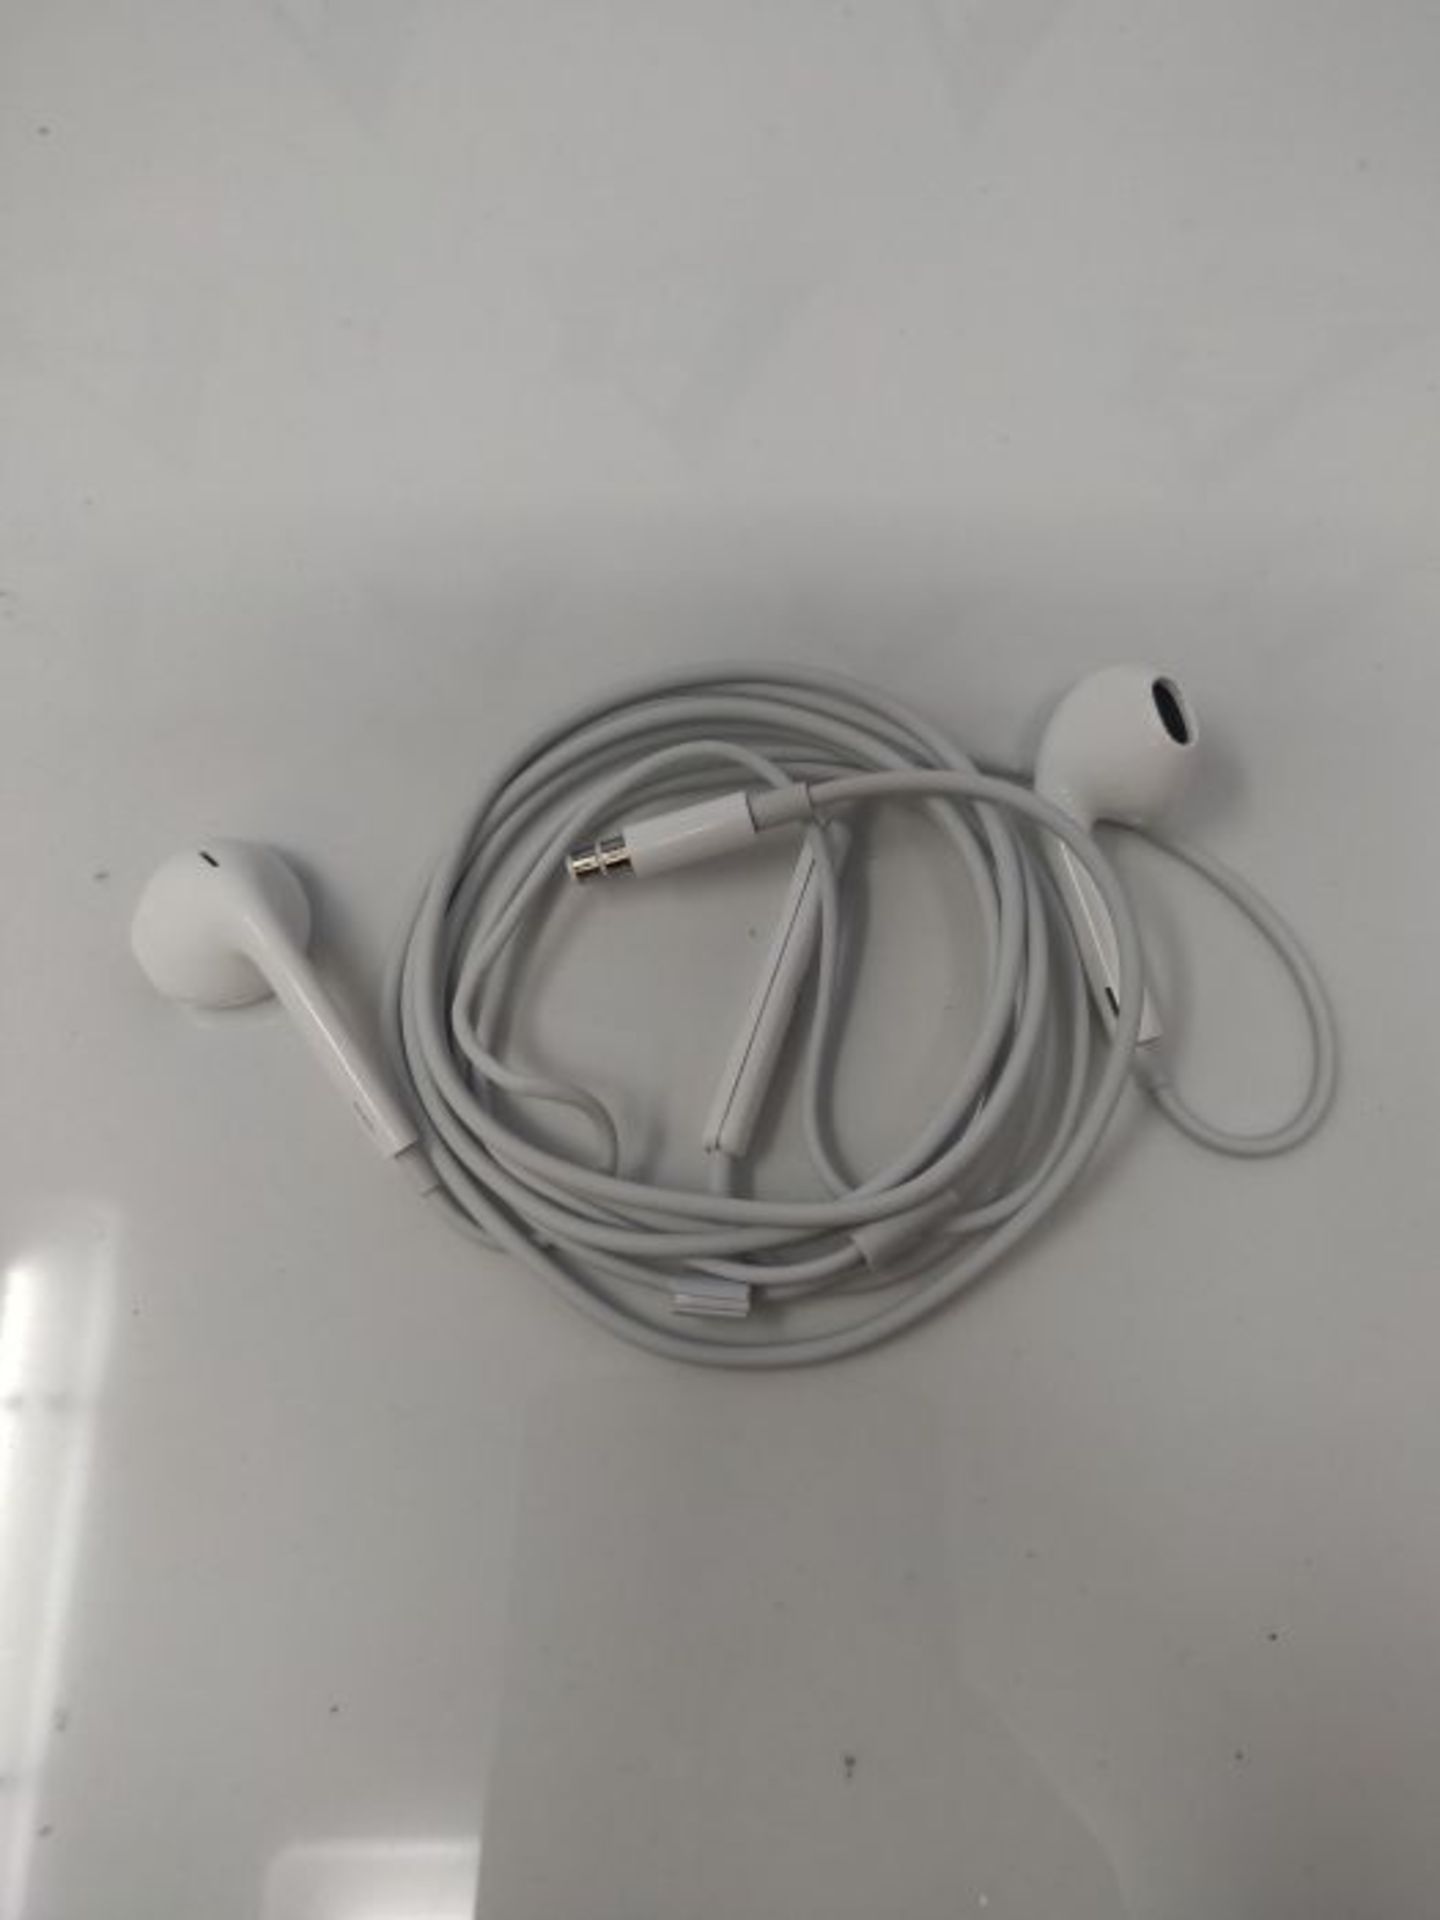 [CRACKED] EarPods with 3.5mm Headphone Plug - Image 3 of 6